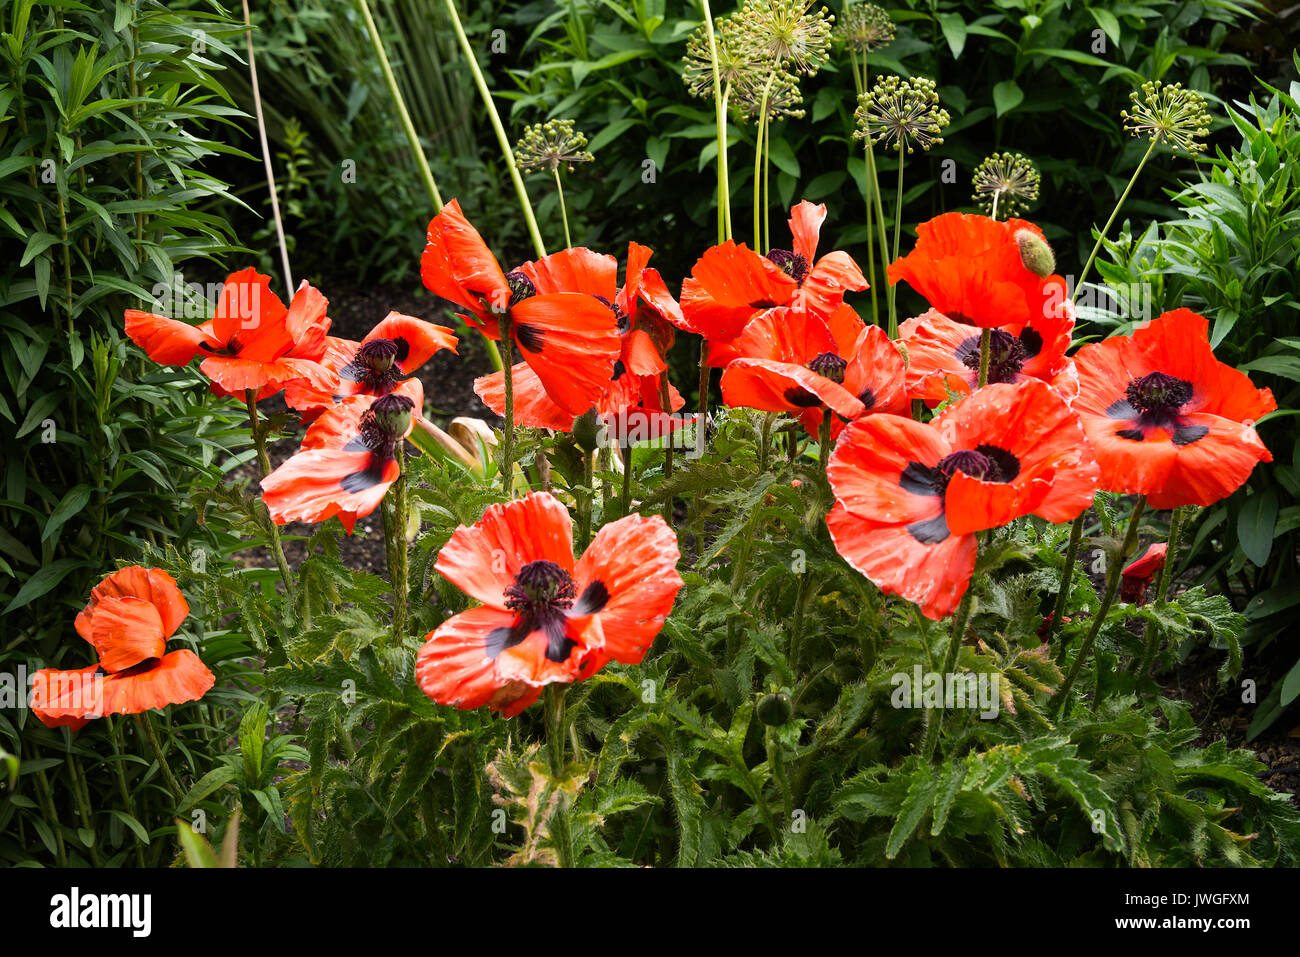 Beautiful Bright Red Opium Poppy Flowers Somniferum on Display in Butchart Gardens Victoria Vancouver Island British Columbia Canada Stock Photo